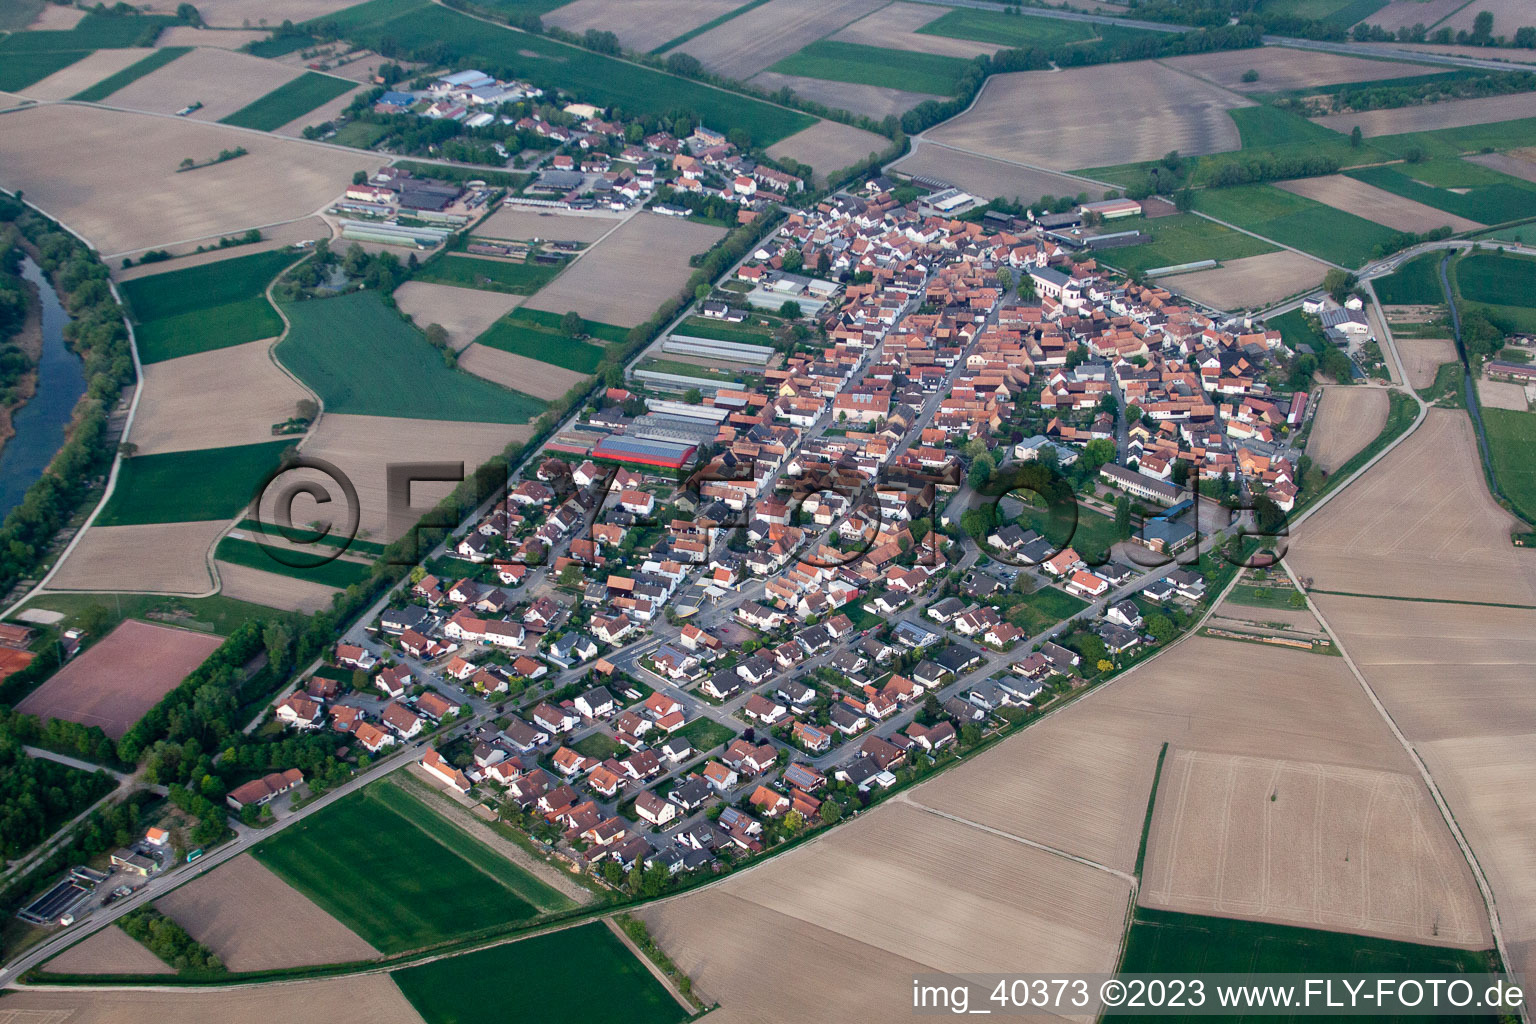 Drone image of Neupotz in the state Rhineland-Palatinate, Germany